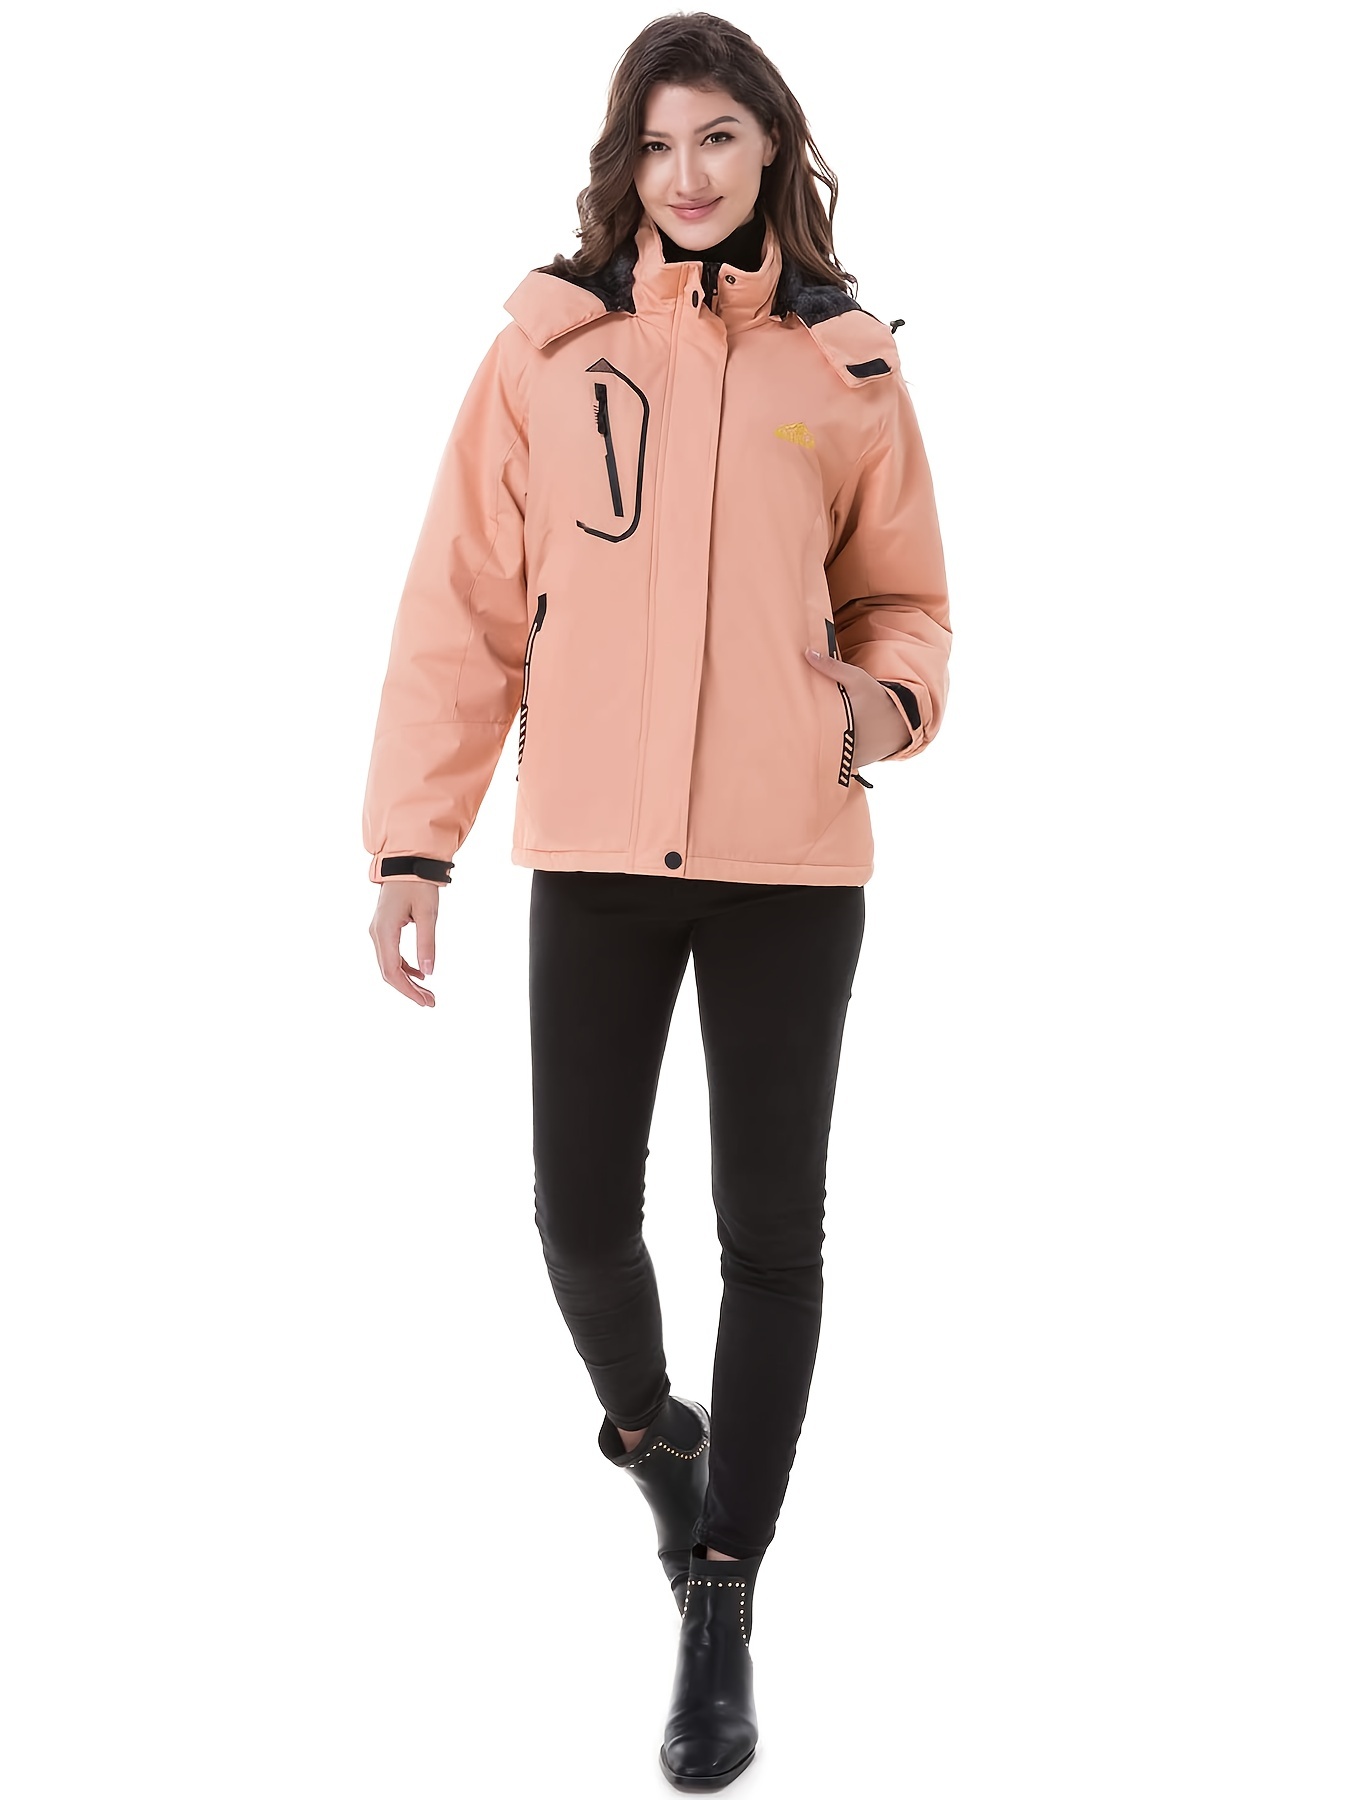 Keevoom Girl's Waterproof Ski Jacket Fleece Snow Coat Windproof Warm Winter  Snowboarding Jacket with Removable Hood